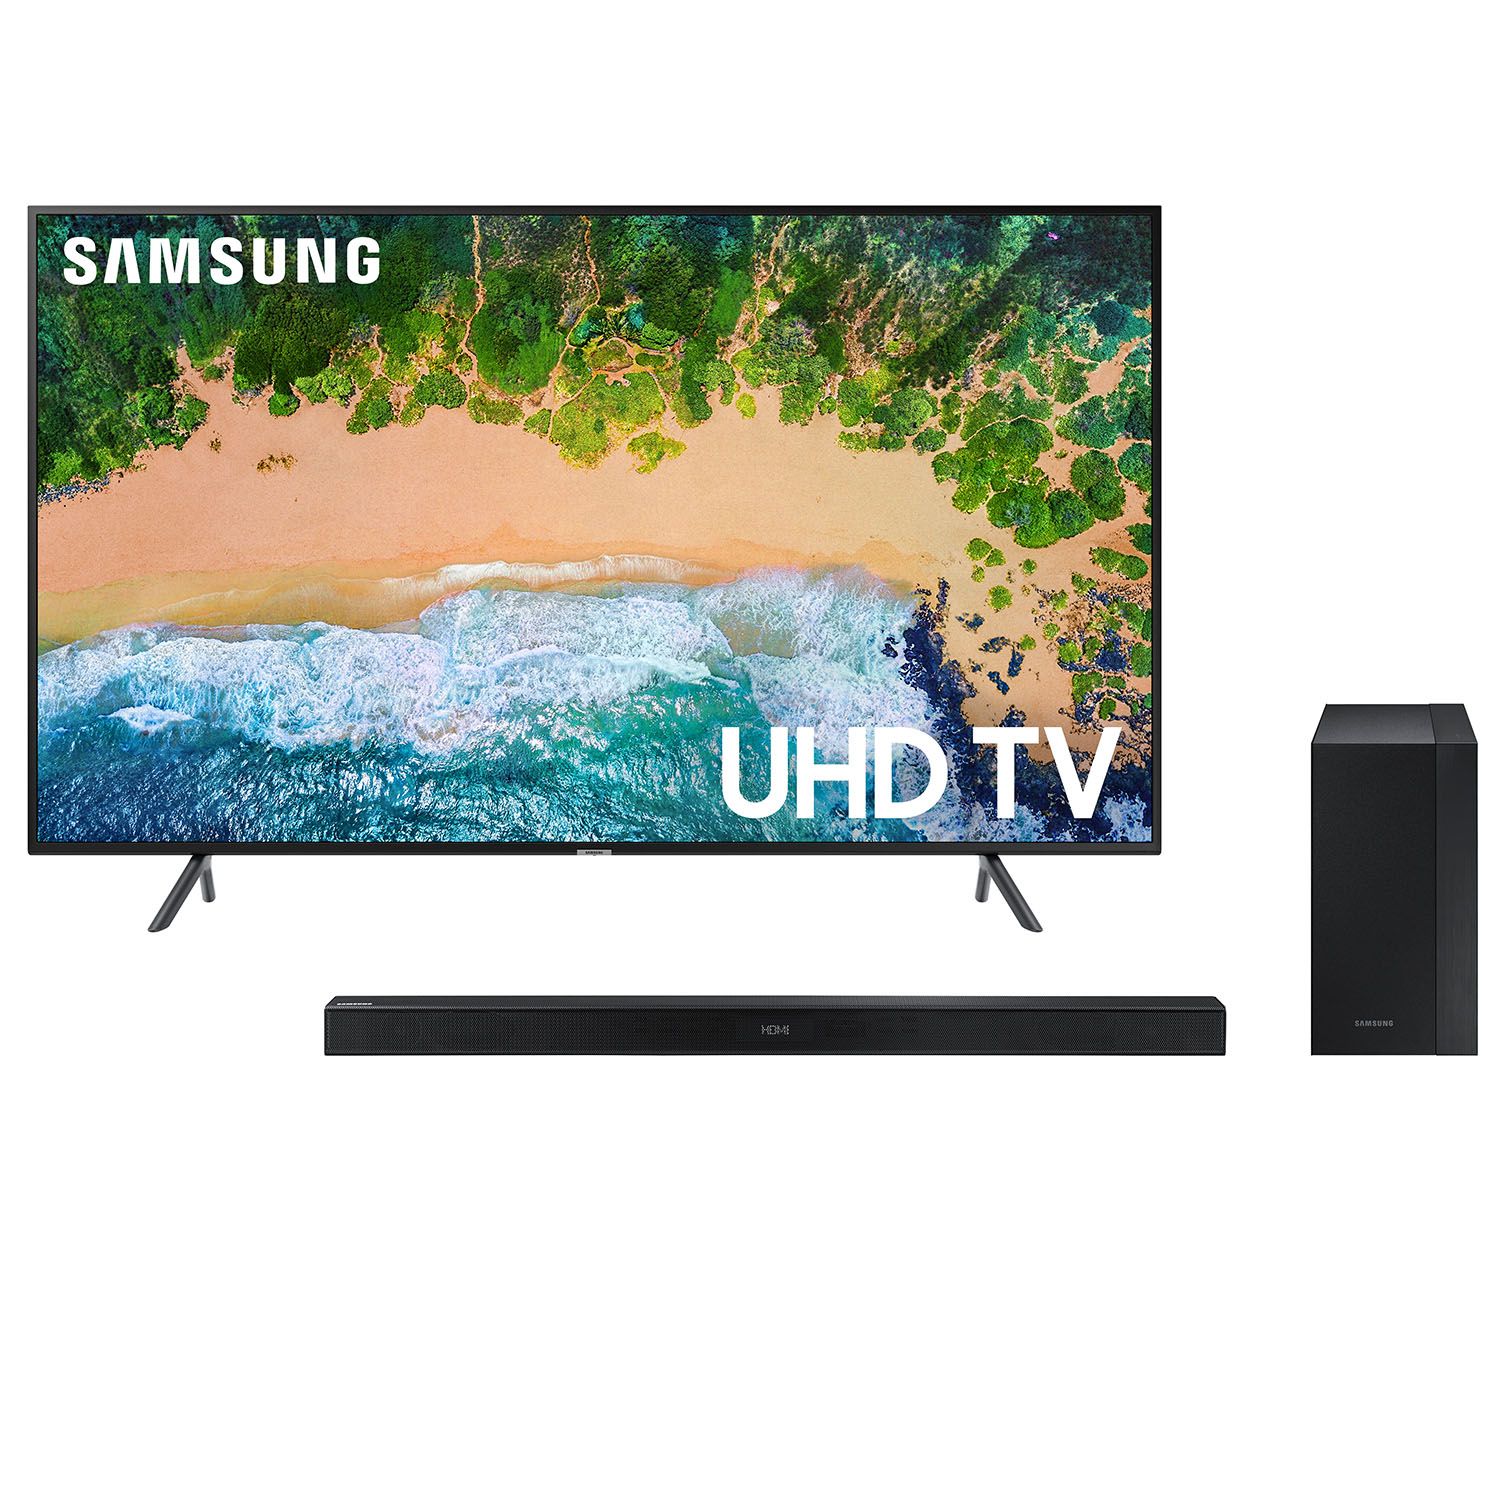 Samsung UN65NU710DFXZA 65″ 4K Ultra HD Smart LED TV + Samsung 2.1 Channel Soundbar (HW-M430)